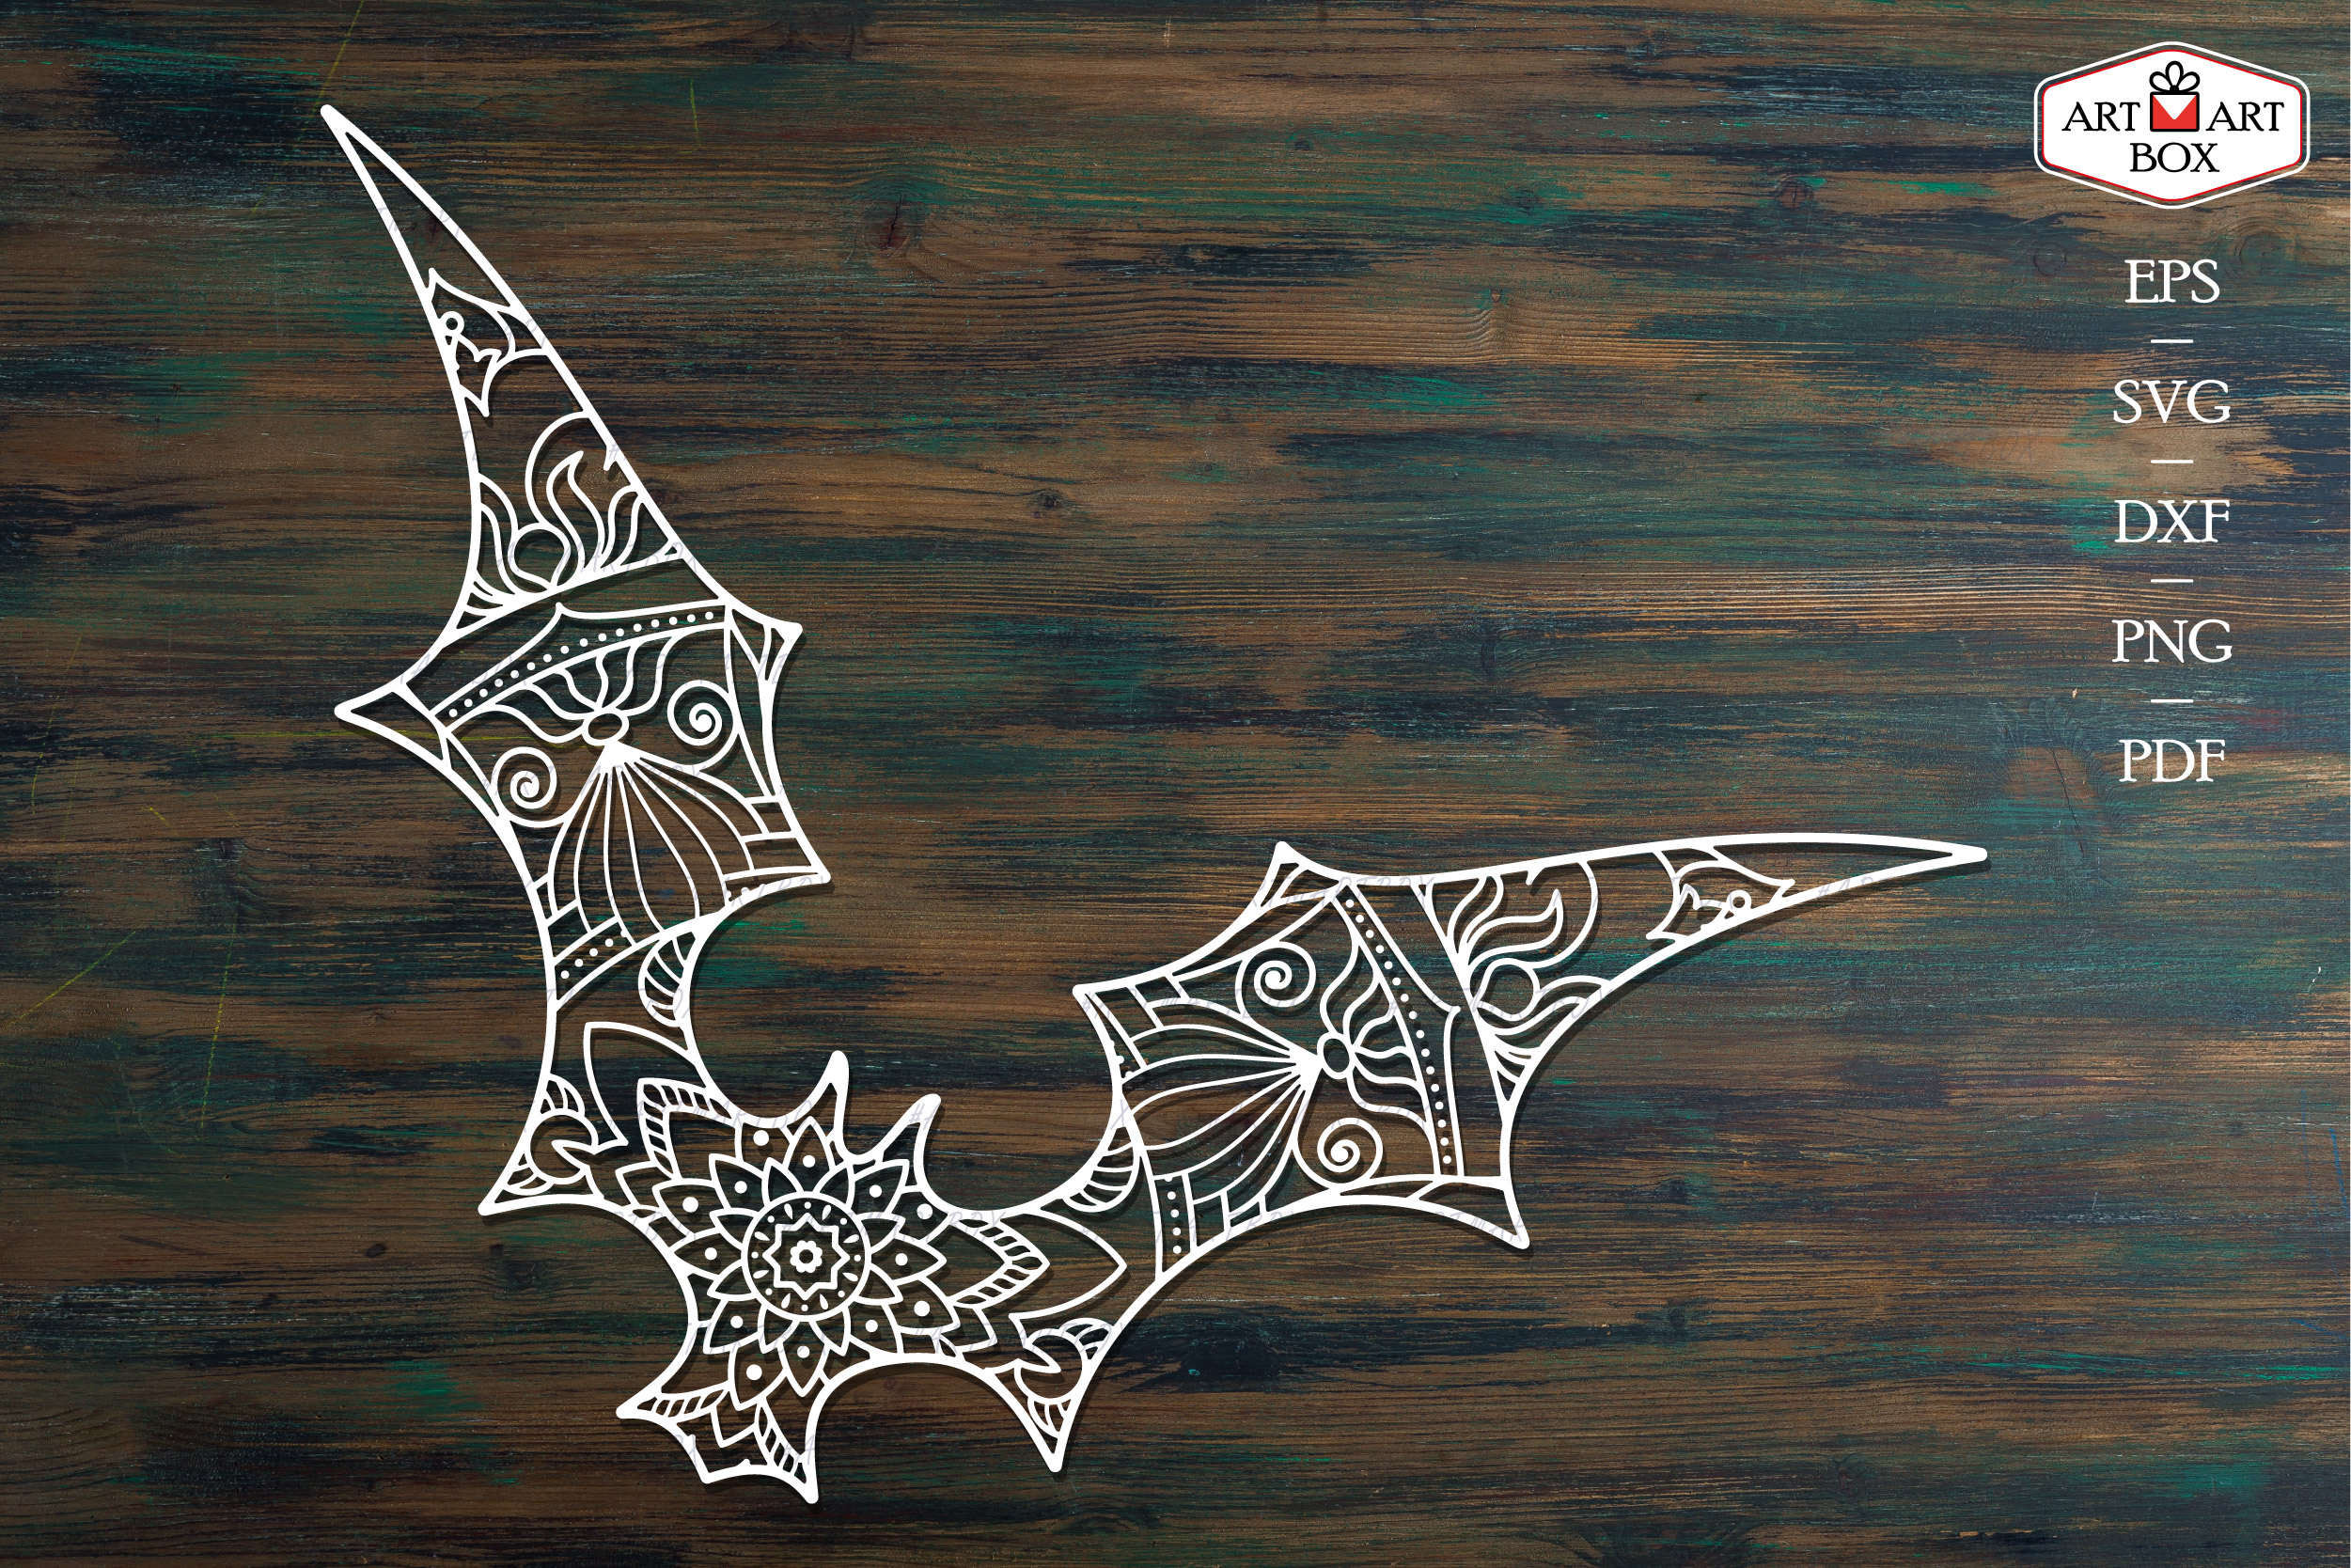 Bat silhouette with mandala.